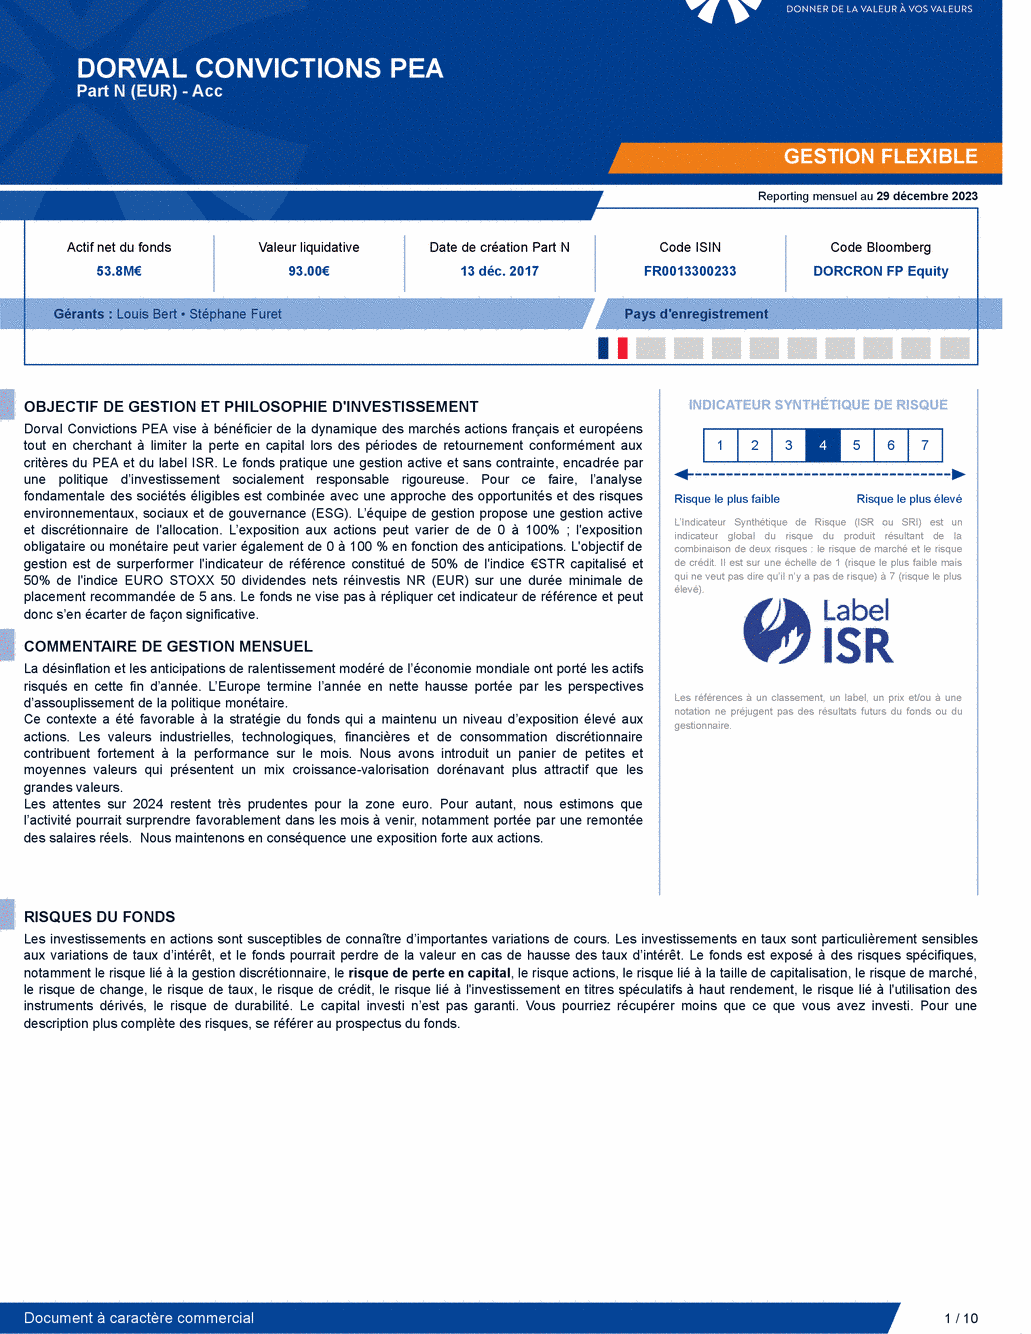 Reporting DORVAL CONVICTIONS PEA Part N - 29/12/2023 - Français